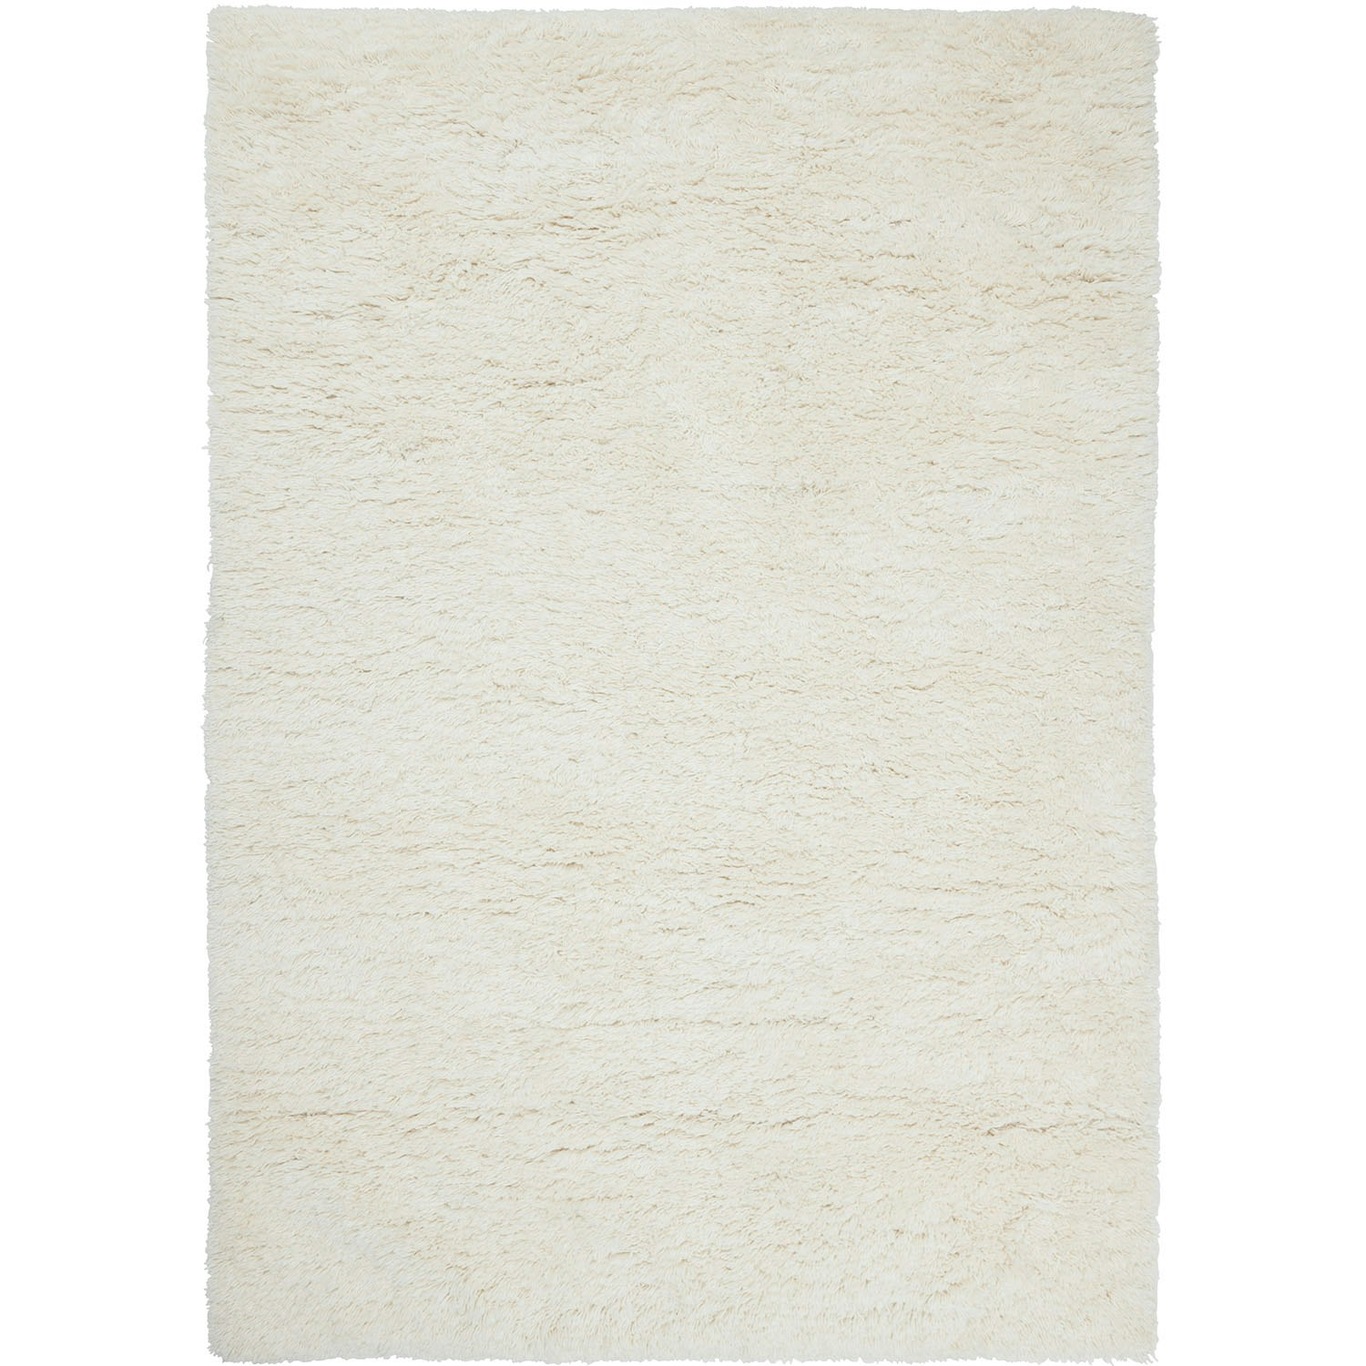 Vantaa Wool Rug White, 200x300 cm